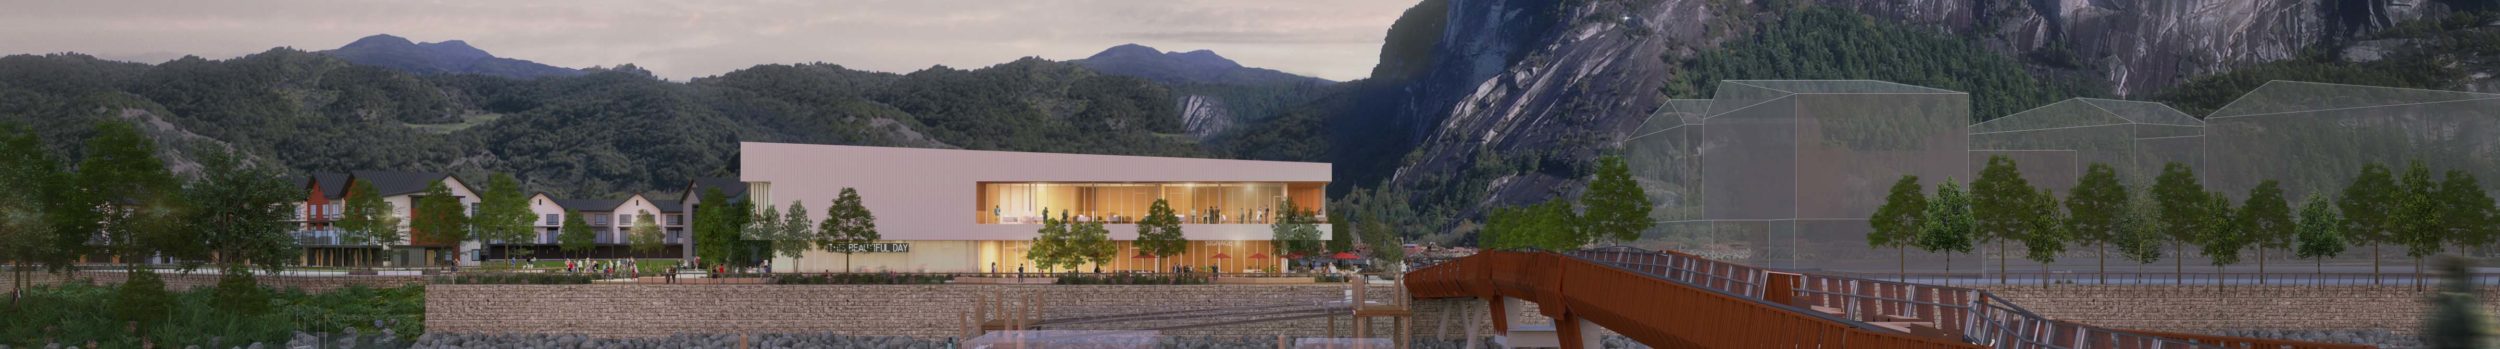 office of mcfarlane biggar architects + designers, Squamish, SEAandSKY Amenity Centre